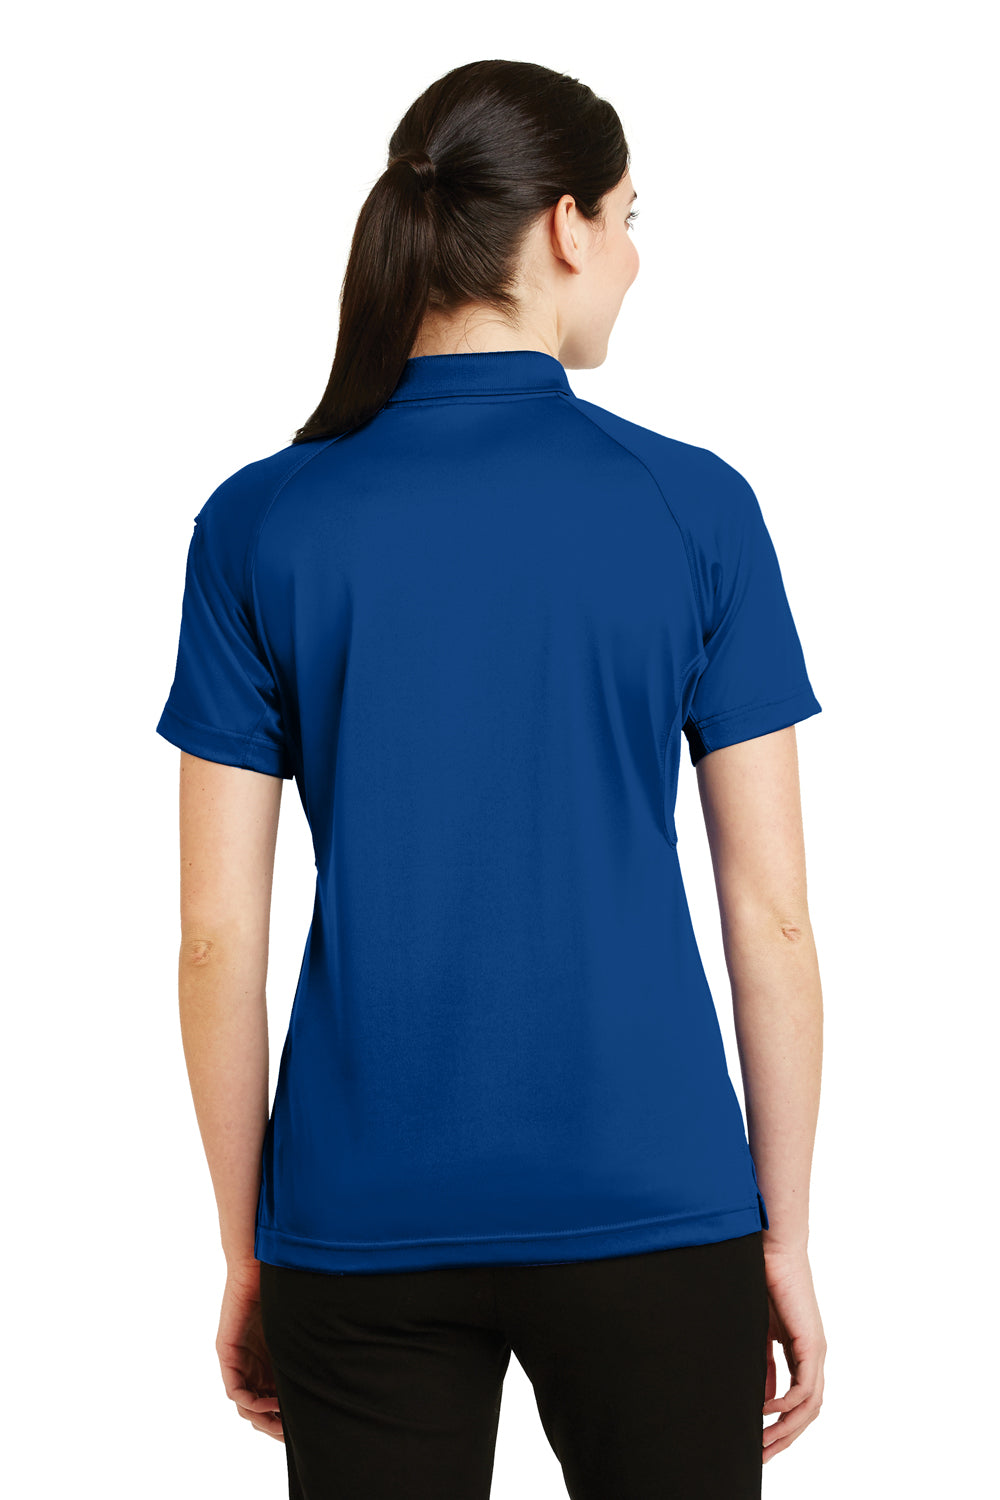 CornerStone CS411 Womens Select Tactical Moisture Wicking Short Sleeve Polo Shirt Royal Blue Back